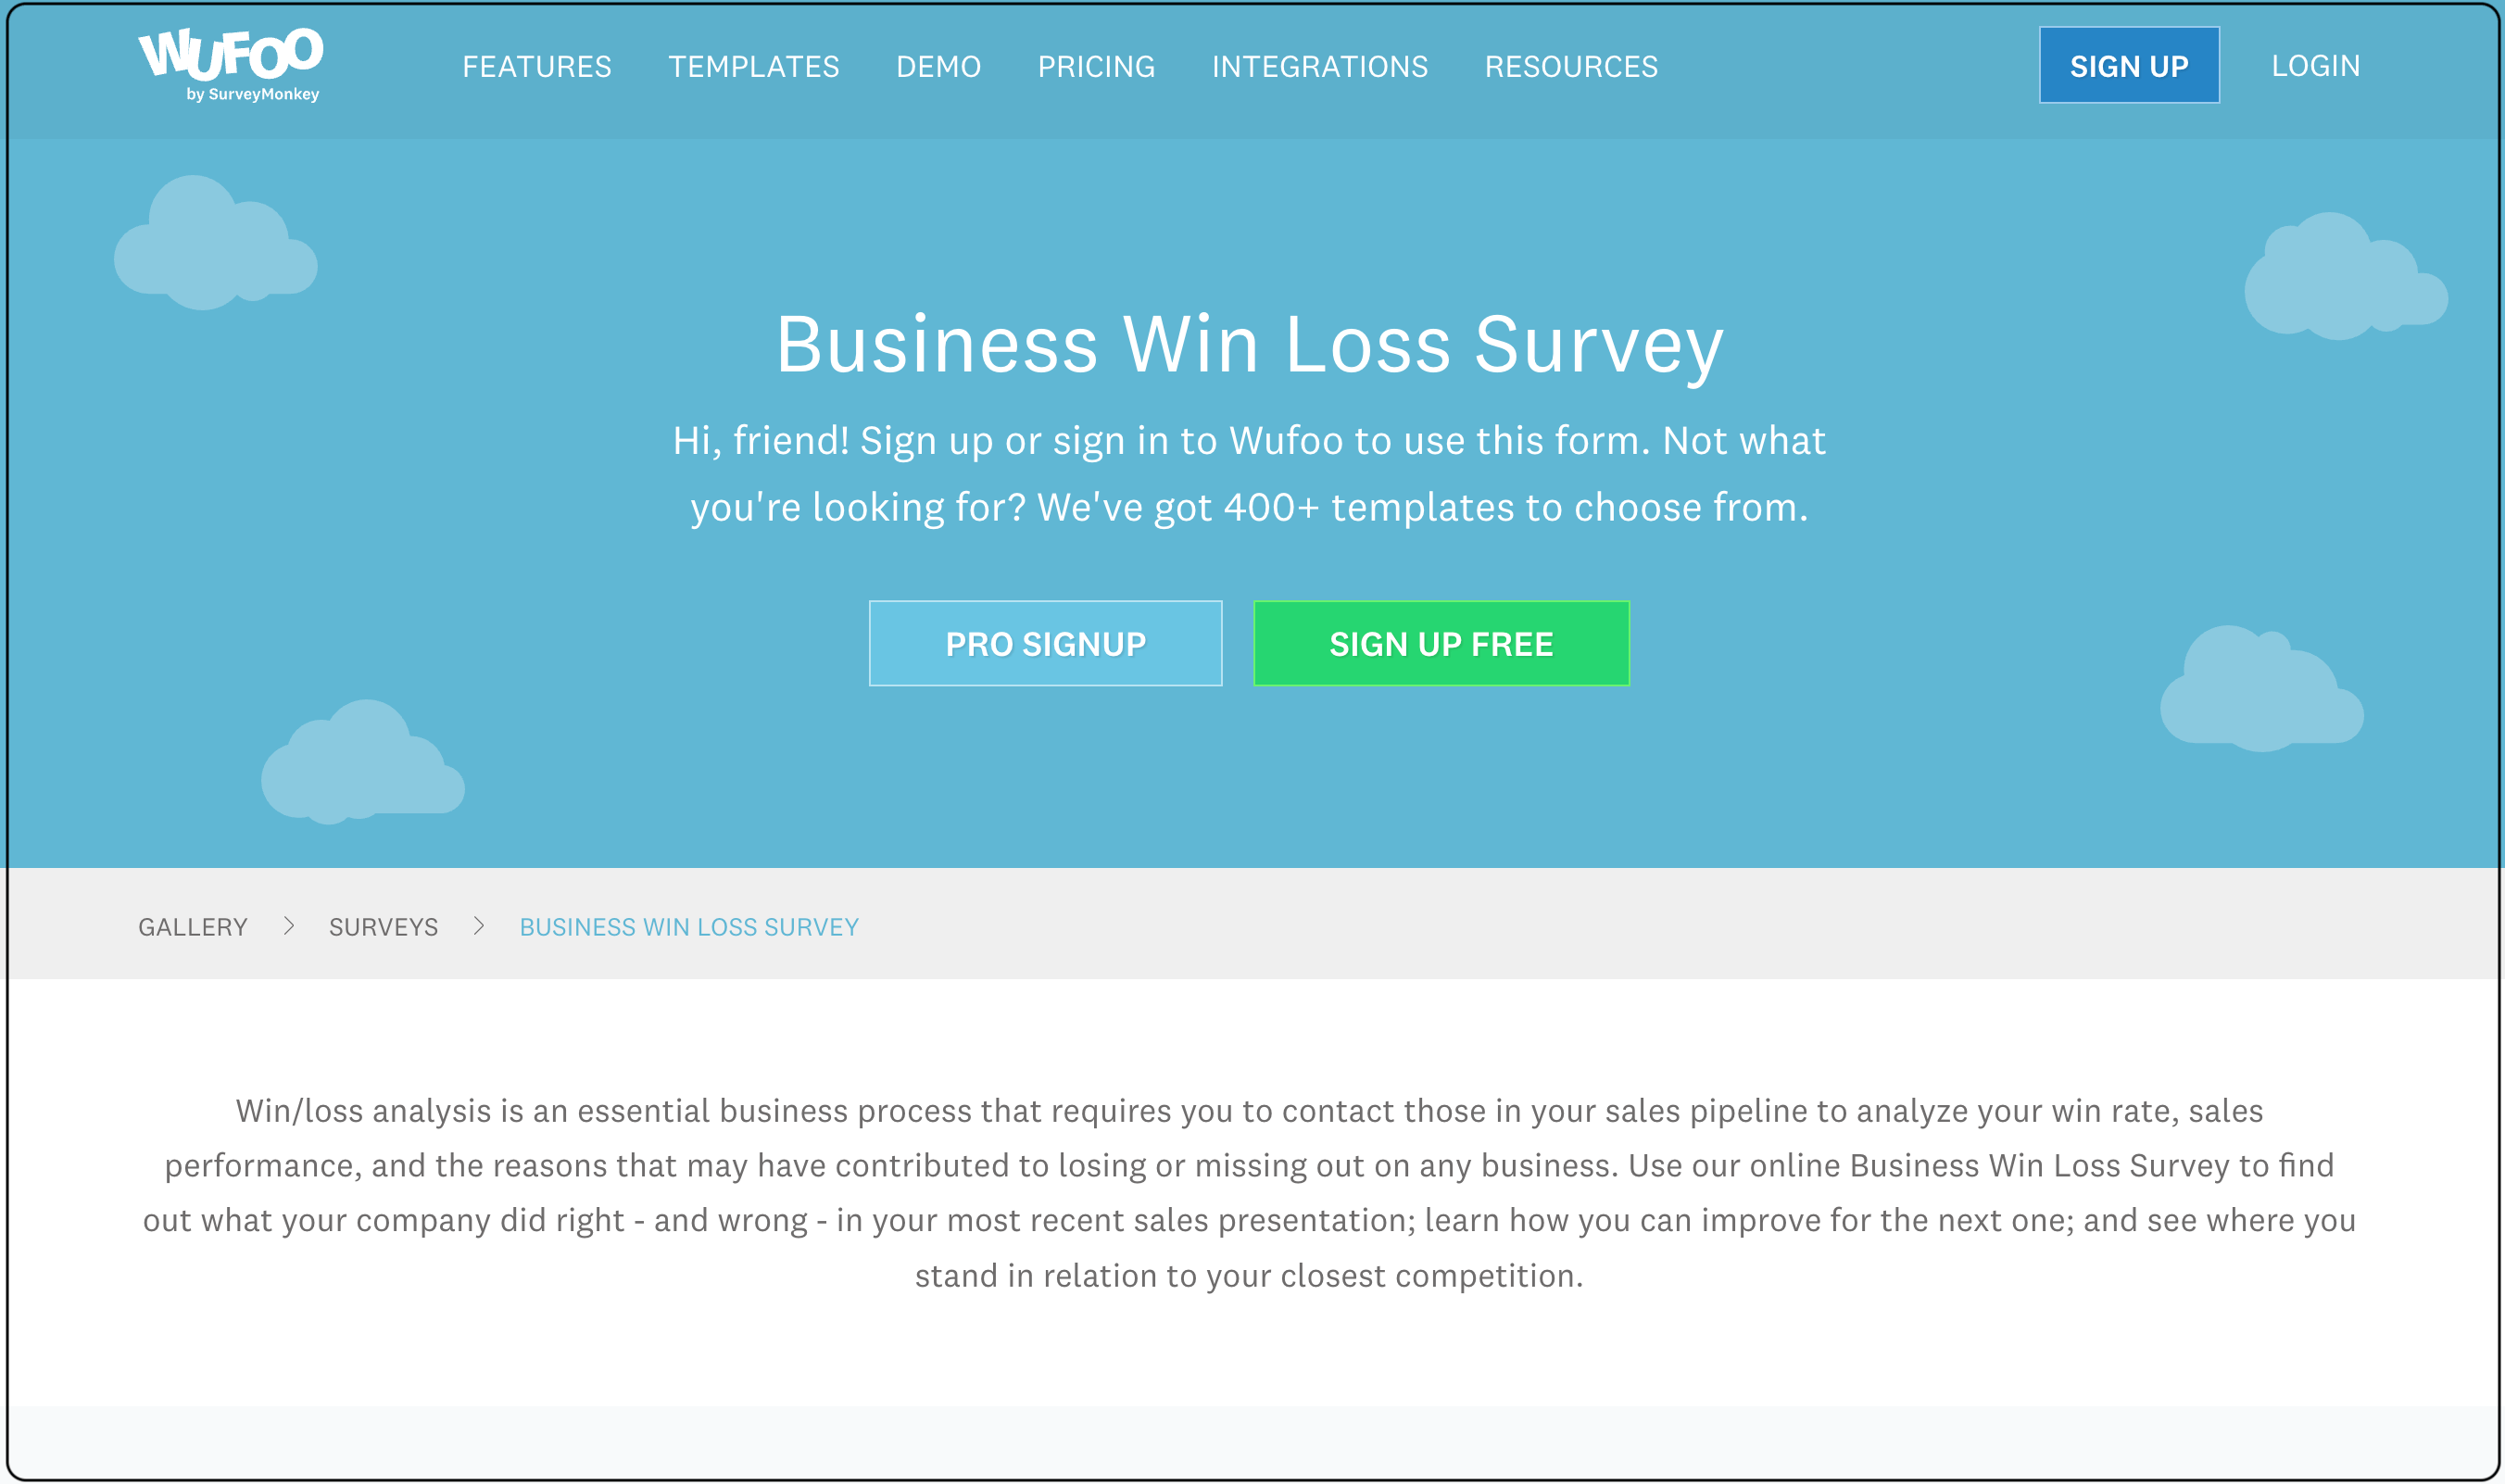 Wufoo’s win/loss survey questionnaire template